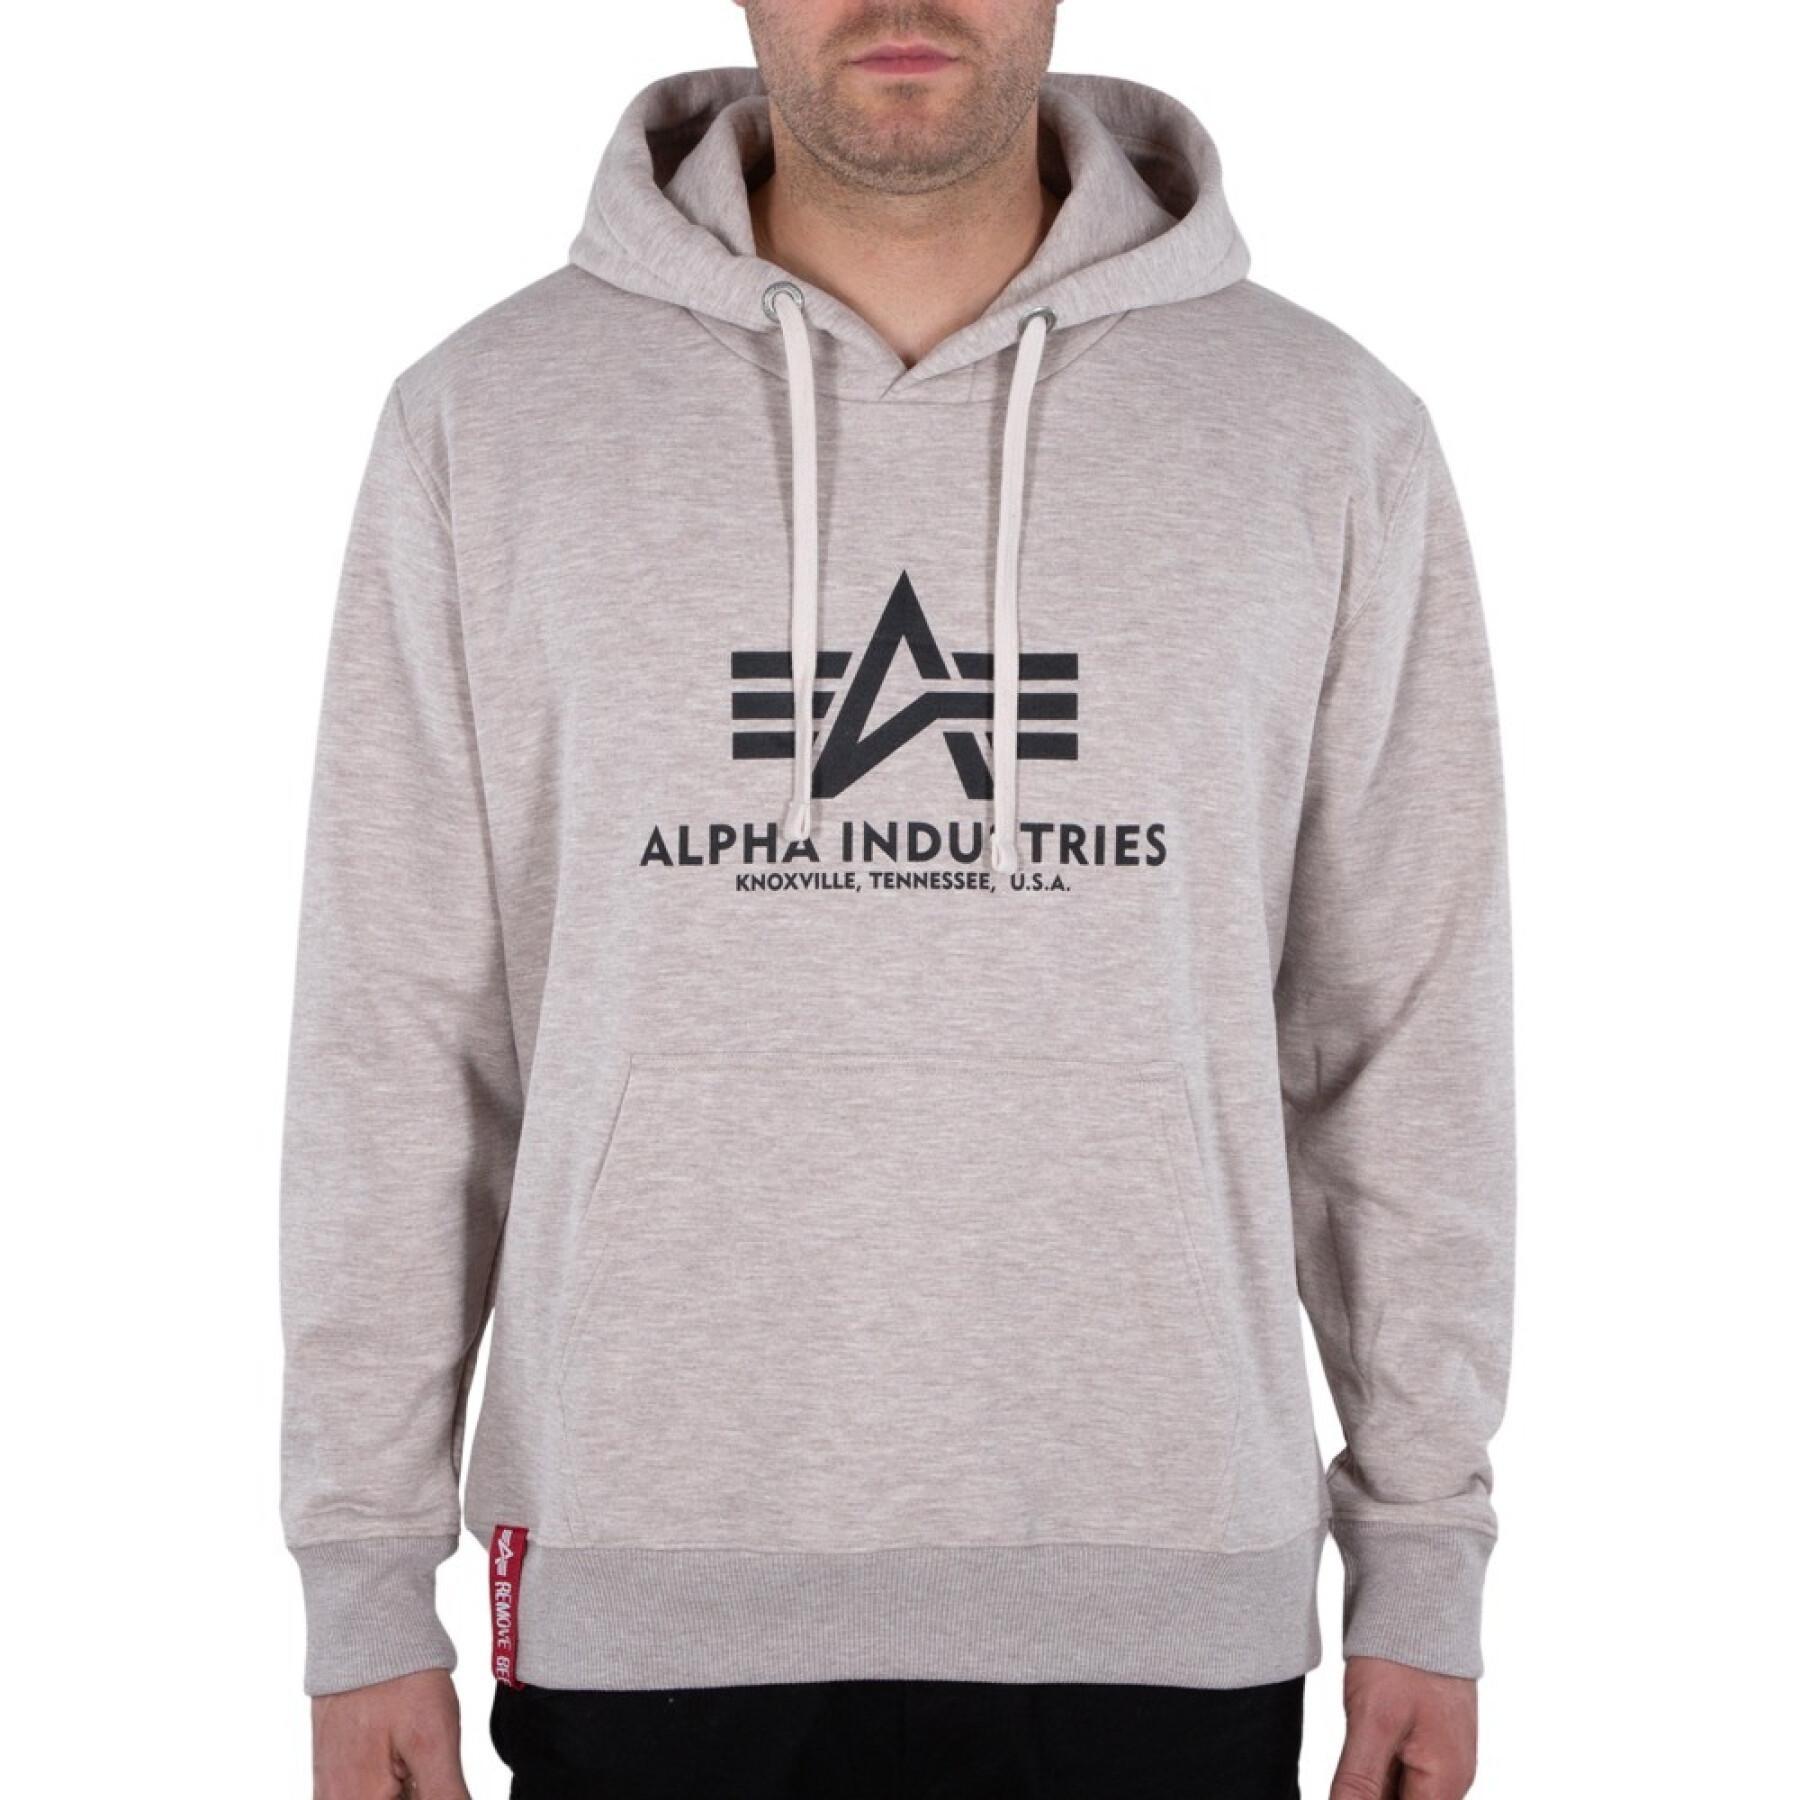 Sweat hooded Alpha Industries Basic